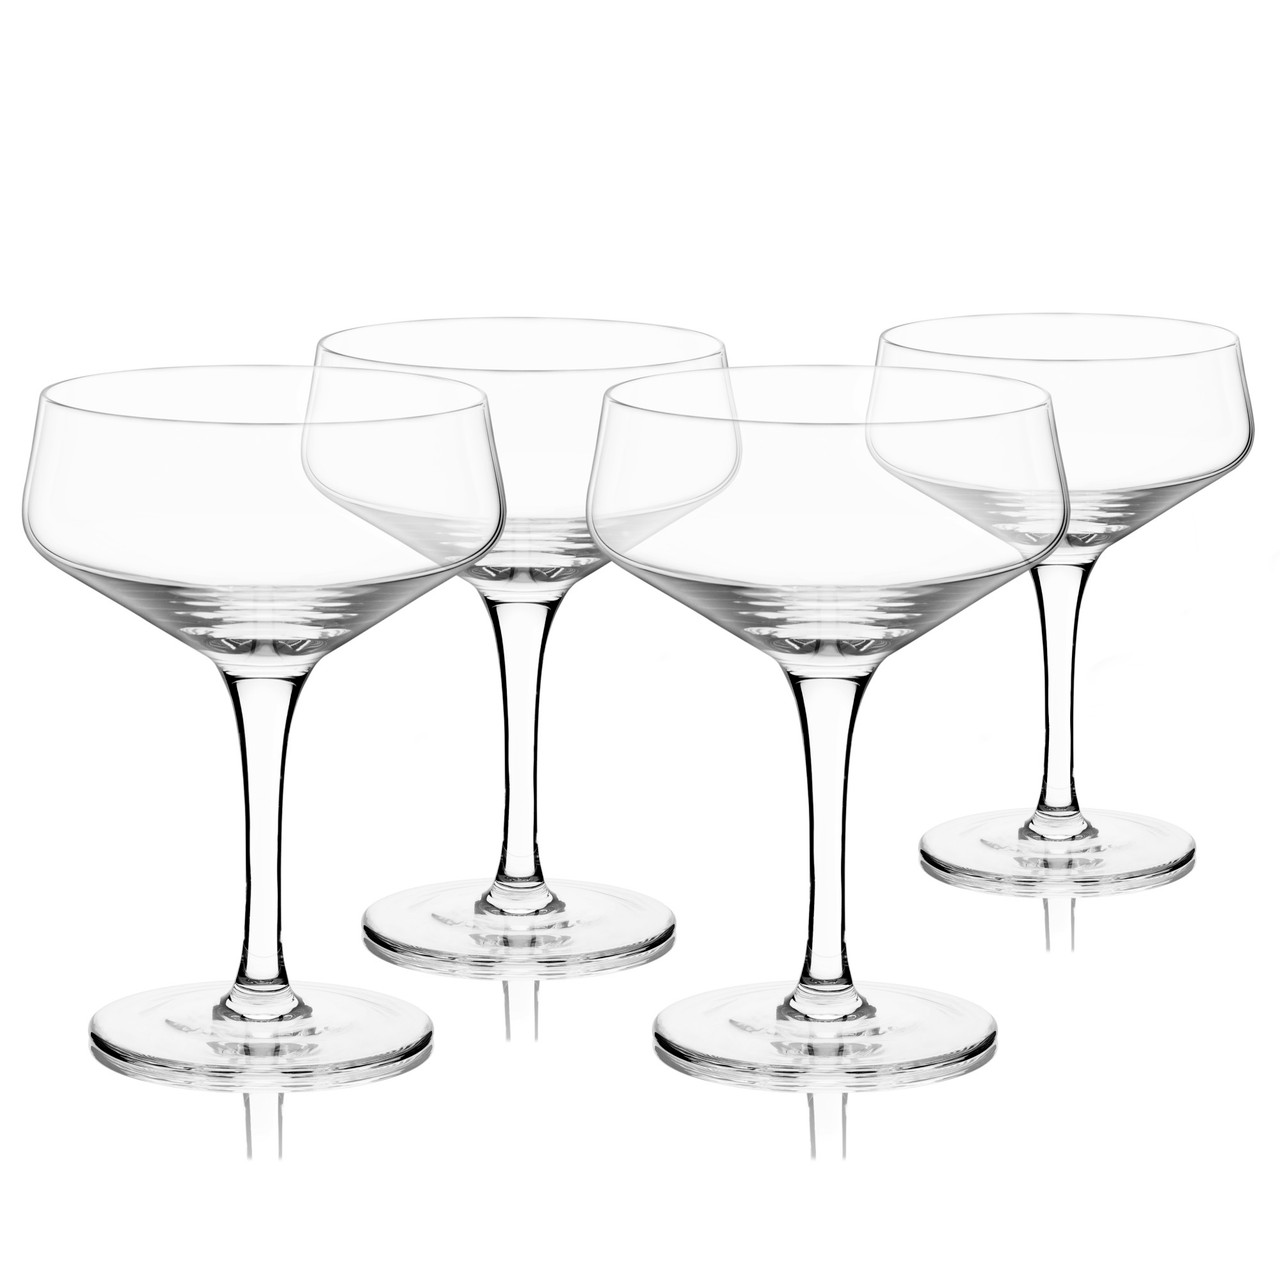 Angled Crystal Coupe Glasses (set of 4) by Viski®